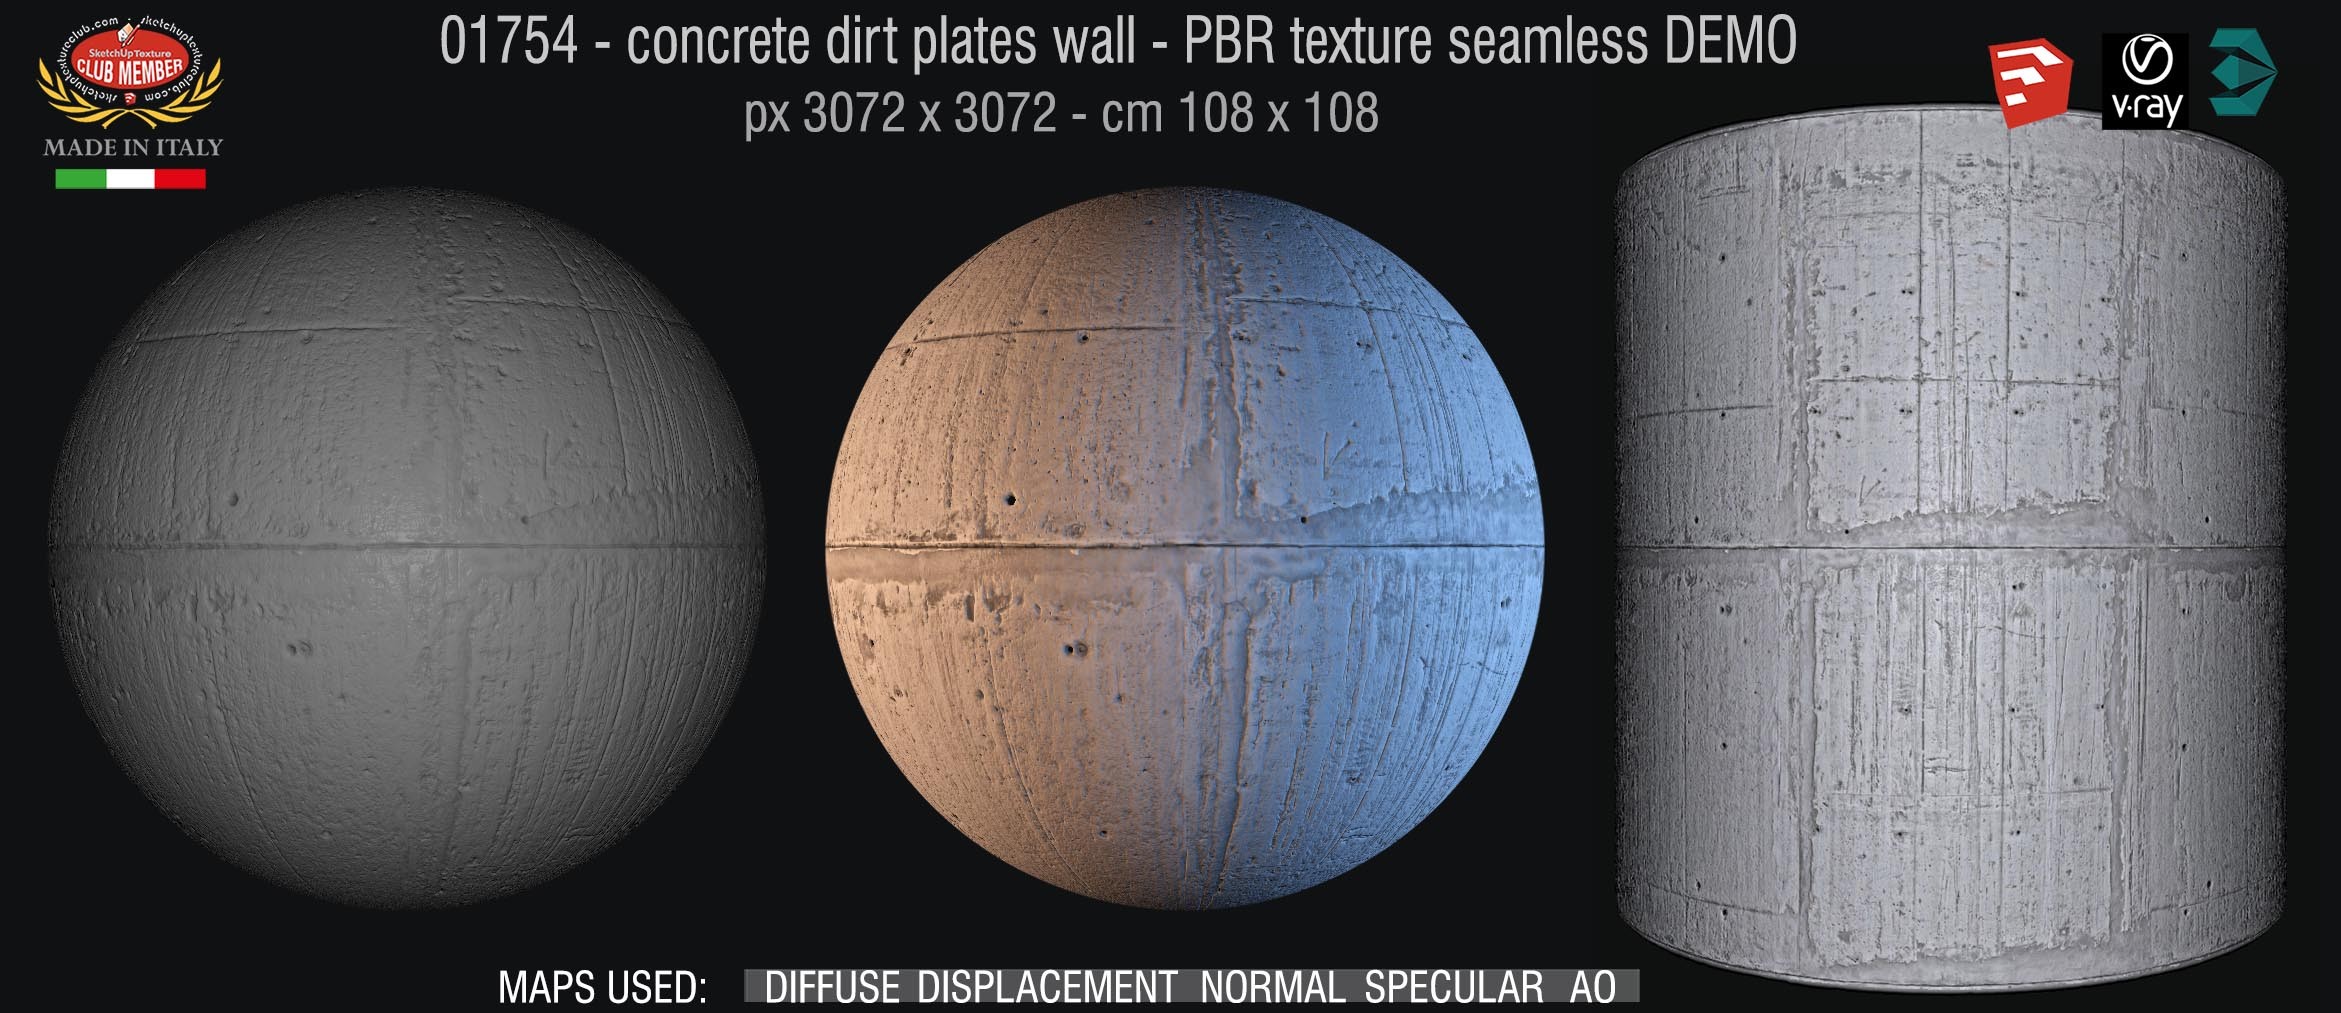 01754 concrete dirt plates wall PBR texture seamless DEMO